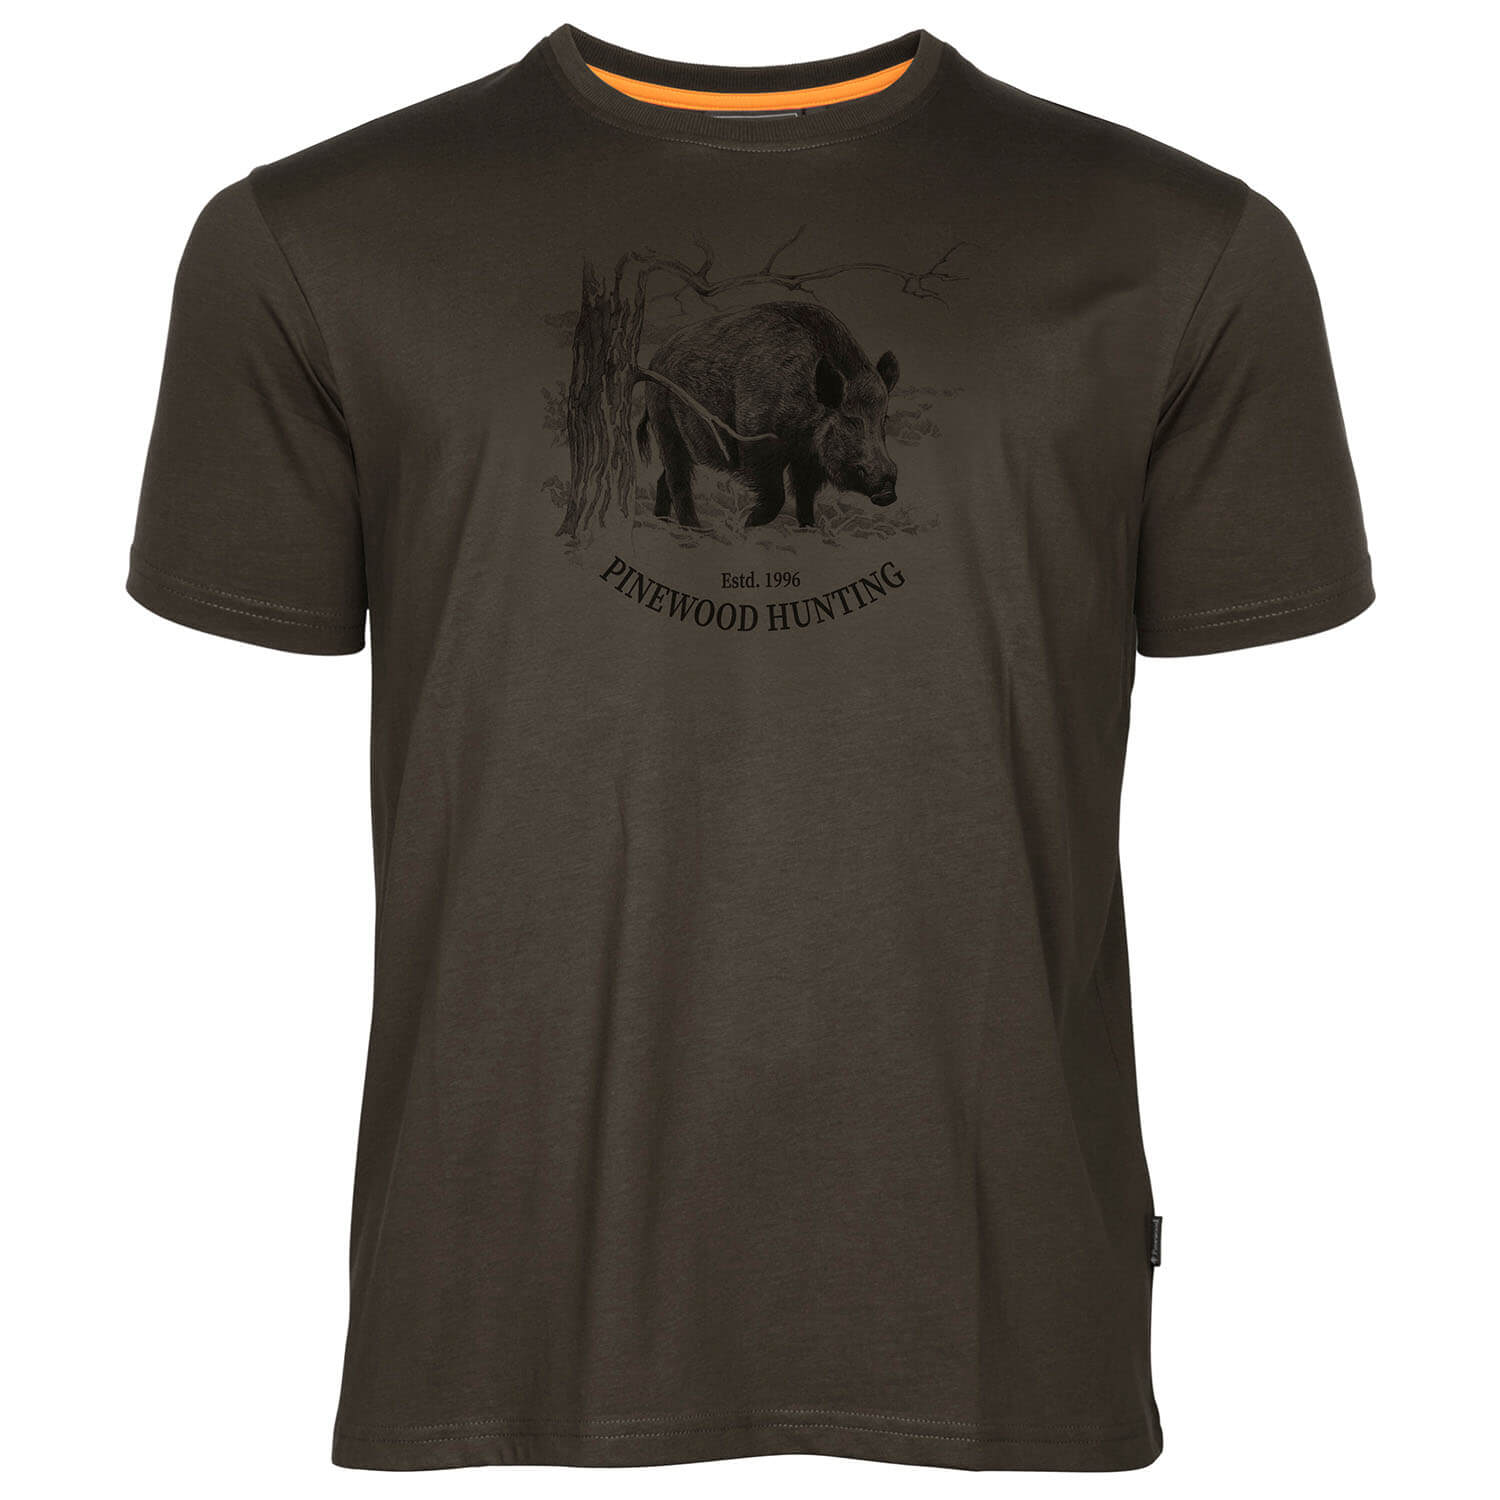  Pinewood T-shirt Wild Zwijn - Zomer jachtkleding